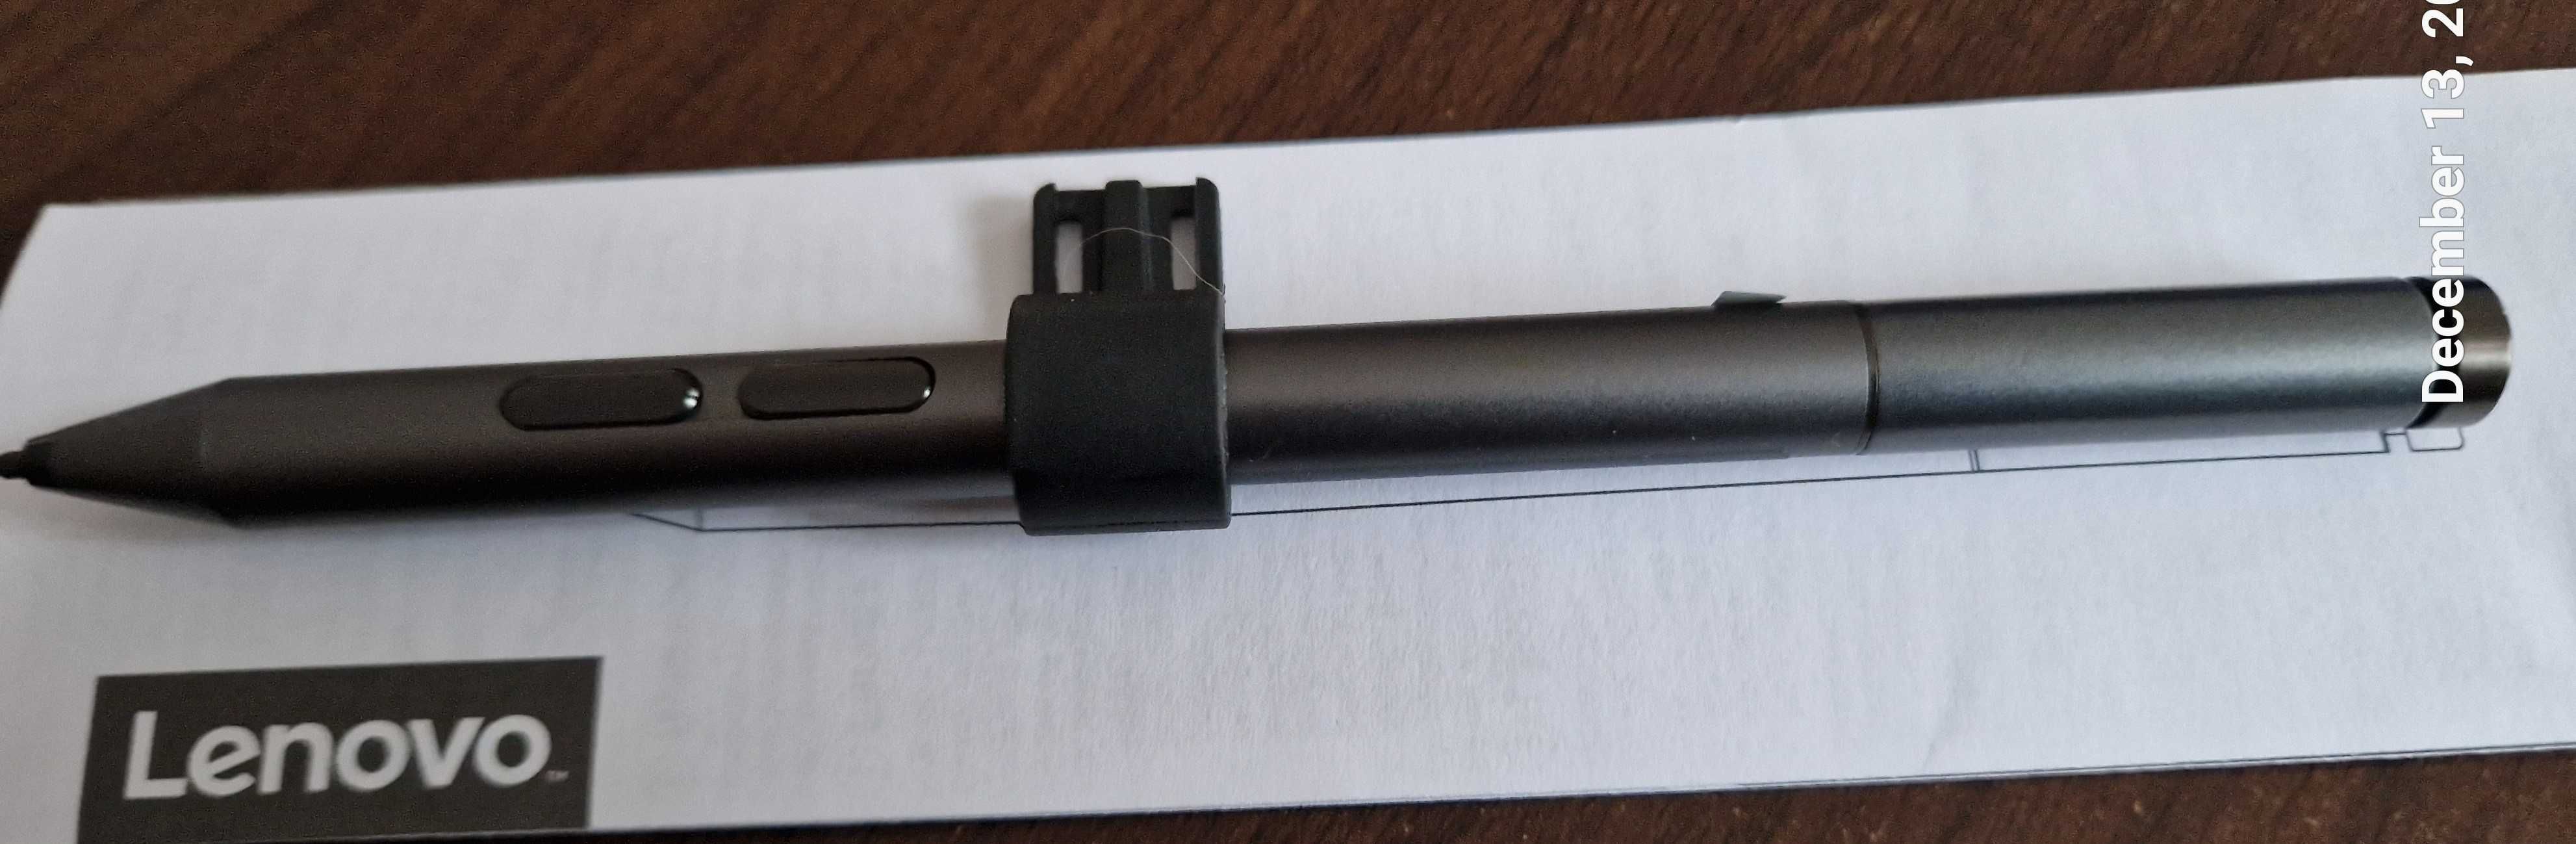 Stylus Pen Lenovo Active Pen 2